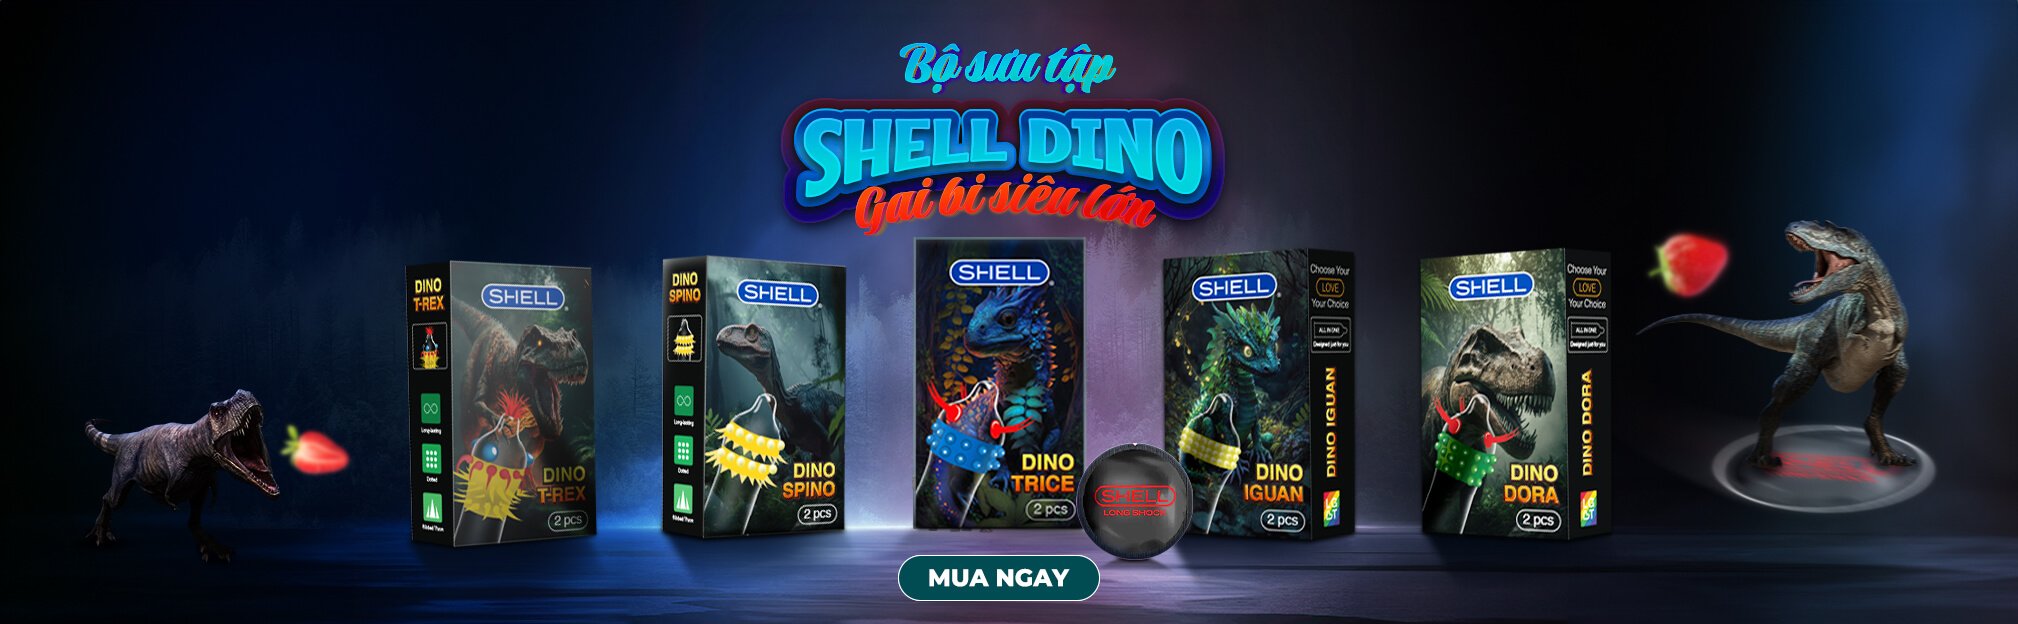 Shell Dino